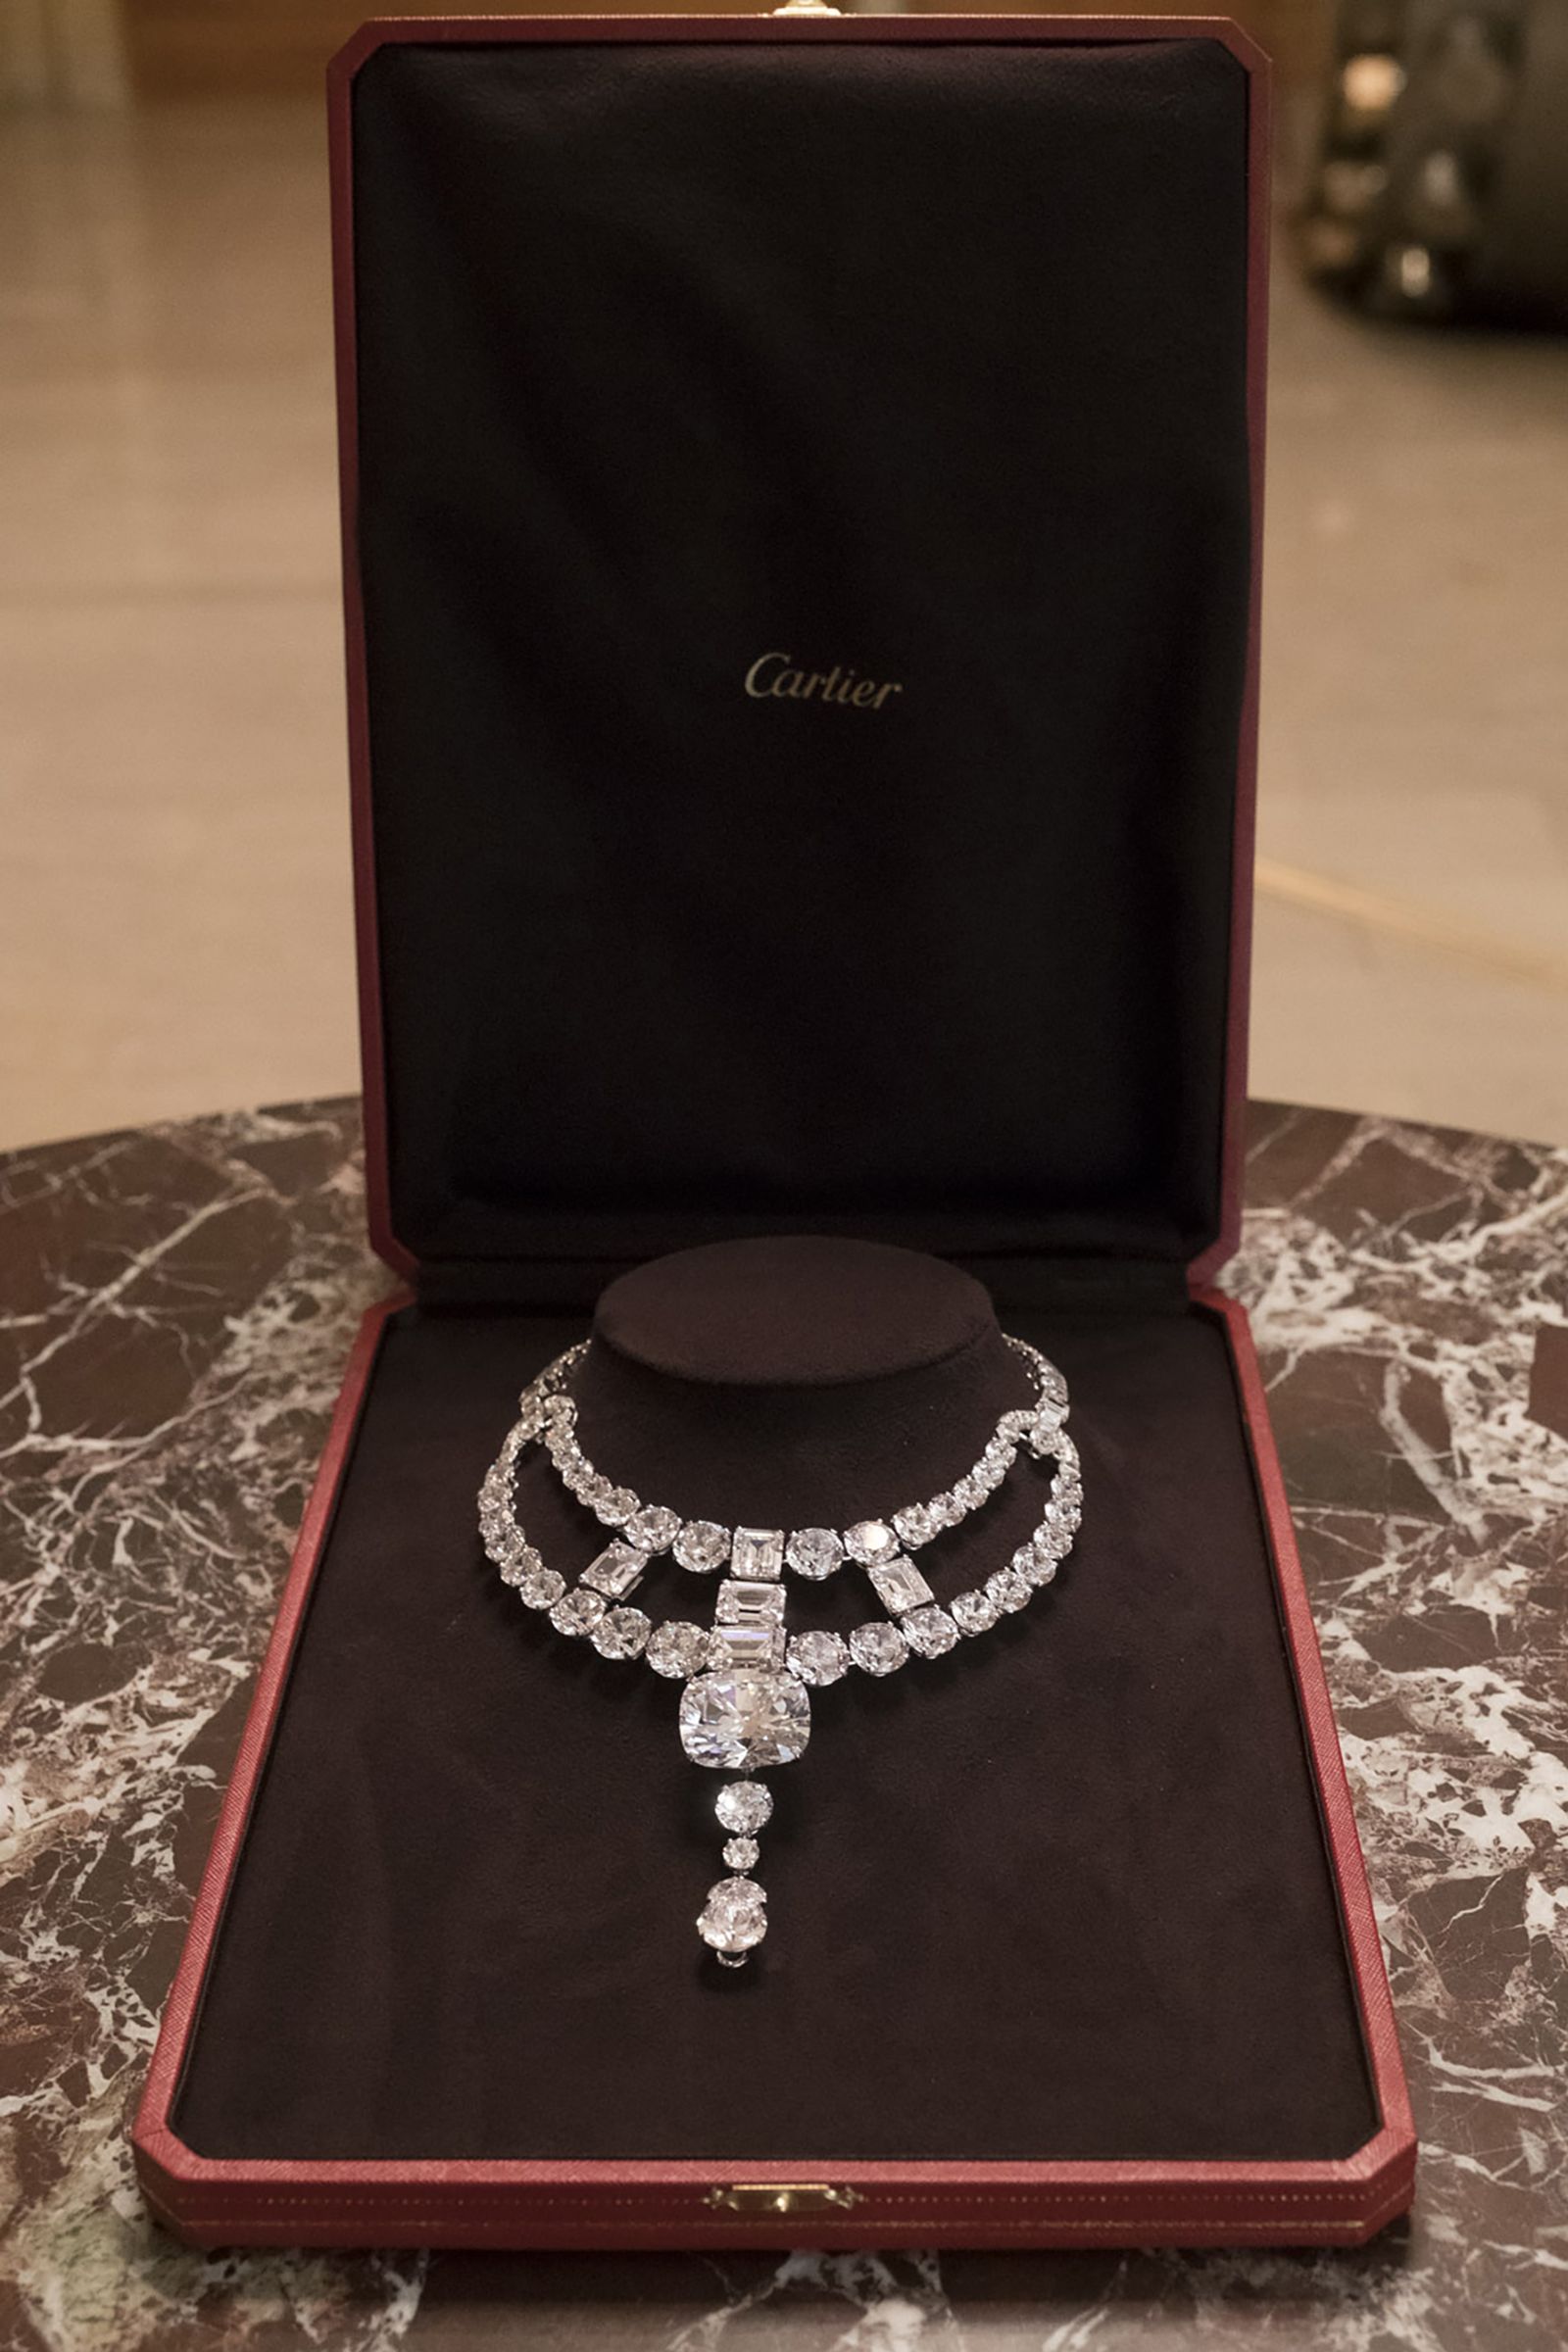 Cartier Diamond Necklace in Ocean's 8 